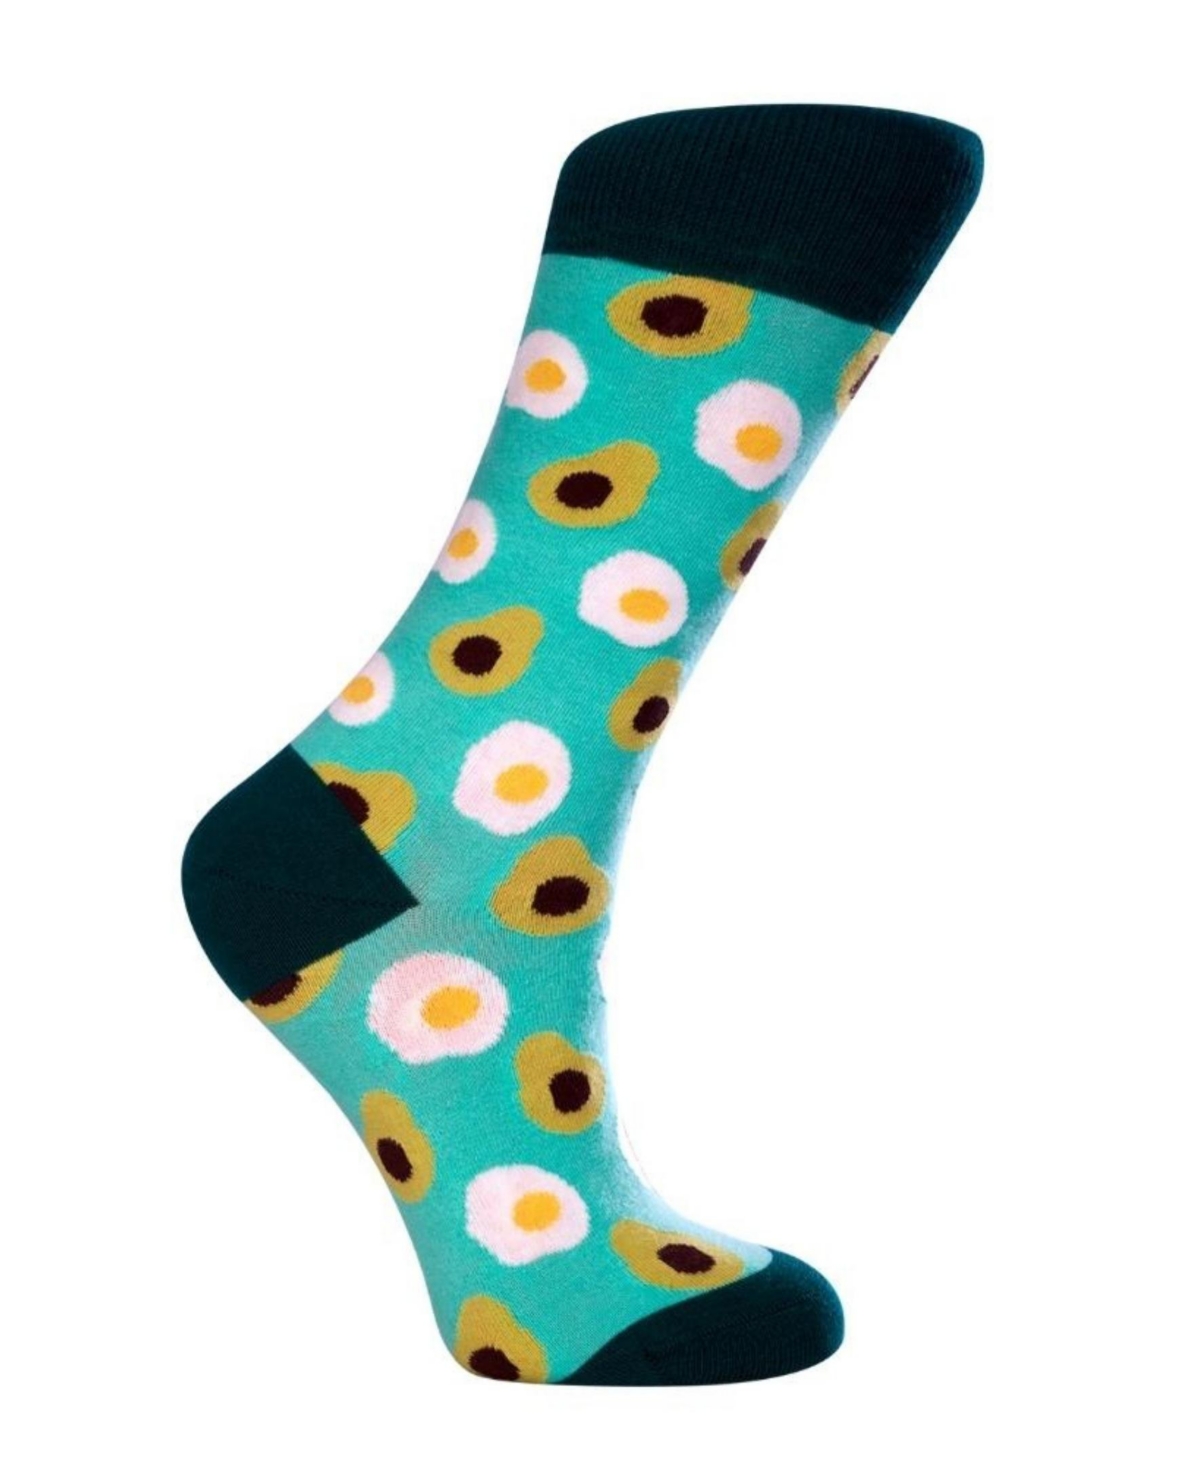 Women's Avocado W-Cotton Novelty Crew Socks with Seamless Toe Design, Pack of 1 - Light Pastel Green